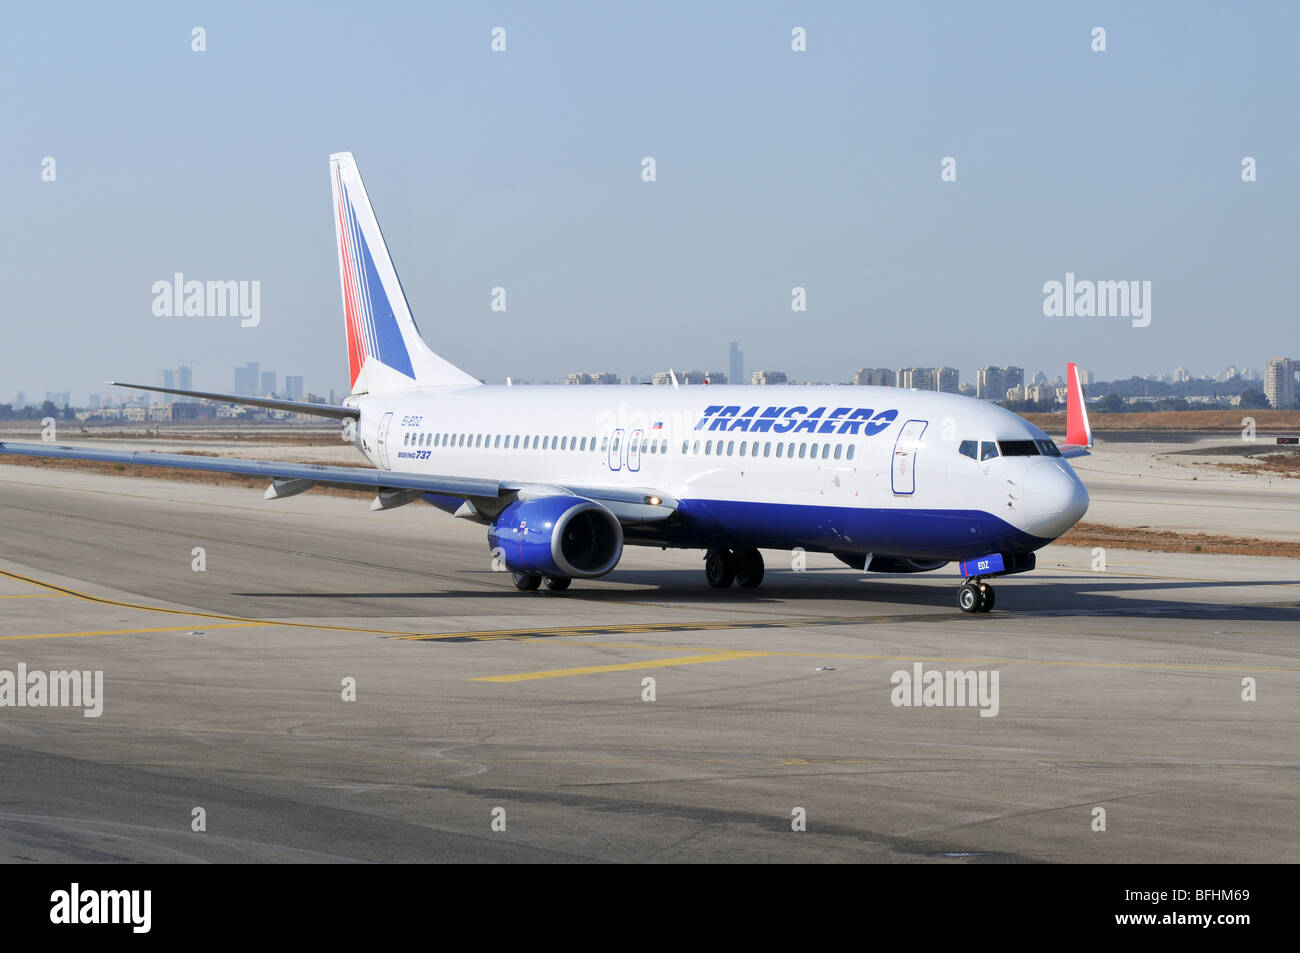 Israel, Ben-Gurion international Airport "Transaero" Boeing 737 Passagier-Jet startklar Stockfoto